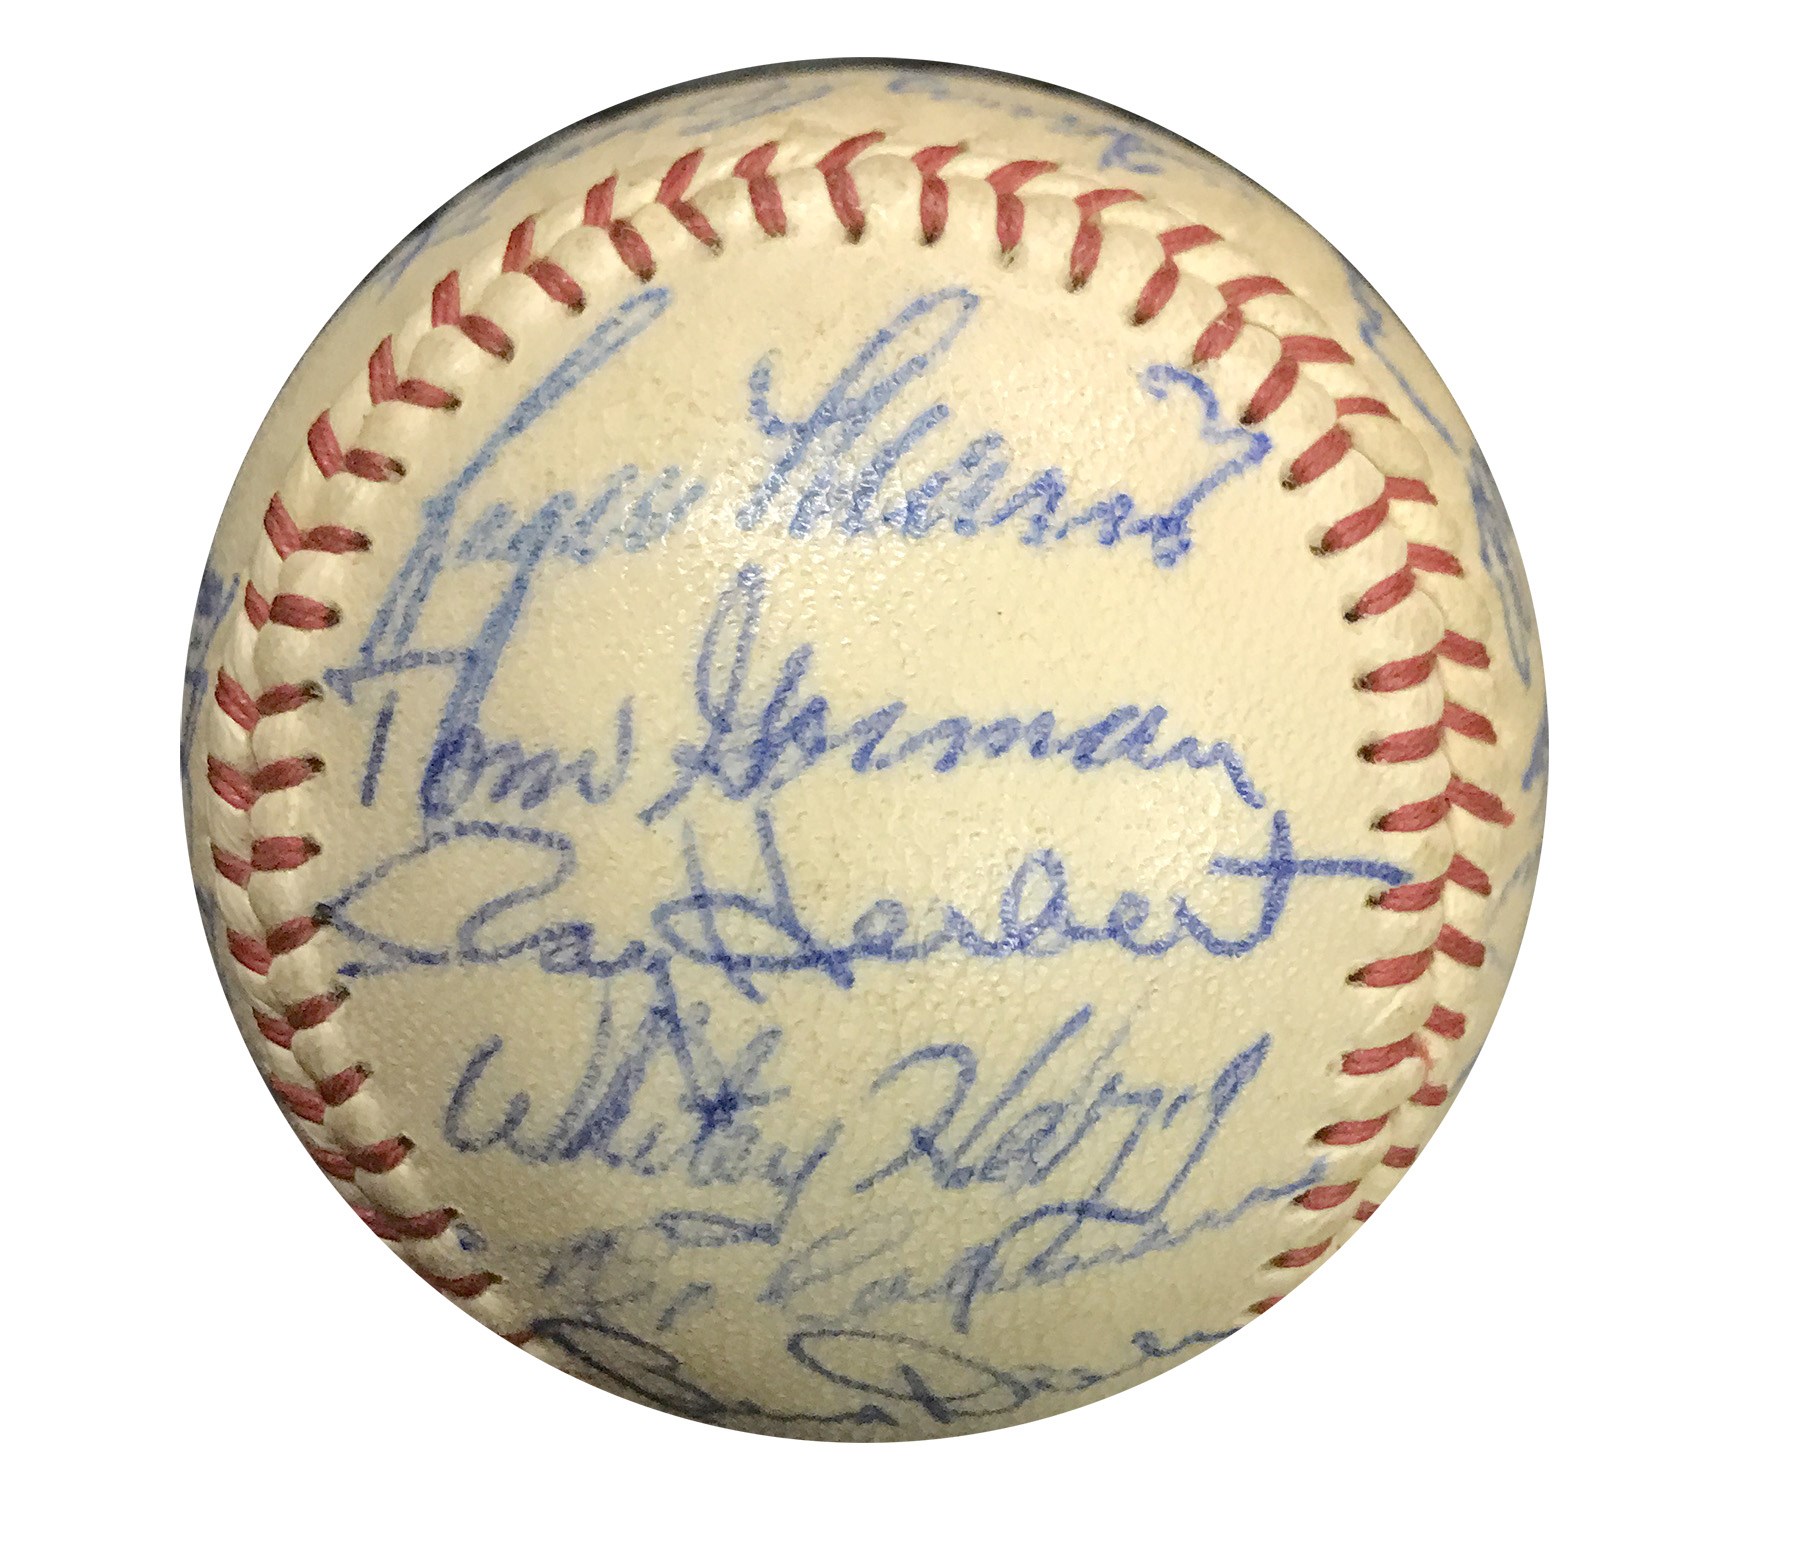 The John O'connor Signed Baseball Collection - 1959 Kansas City Athletics Team-Signed Baseball with Roger Maris (PSA)